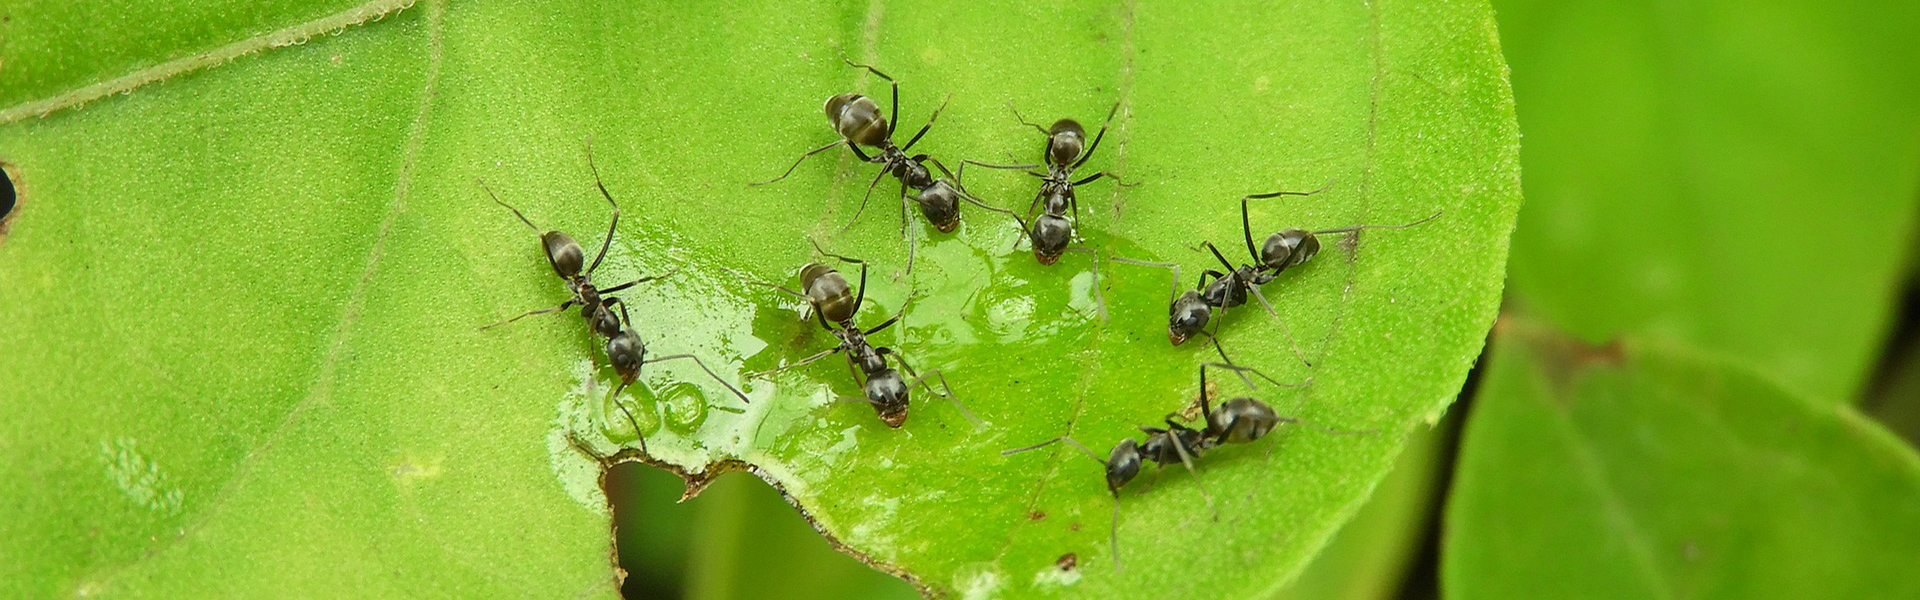 Effective ways to get rid of ants in the garden